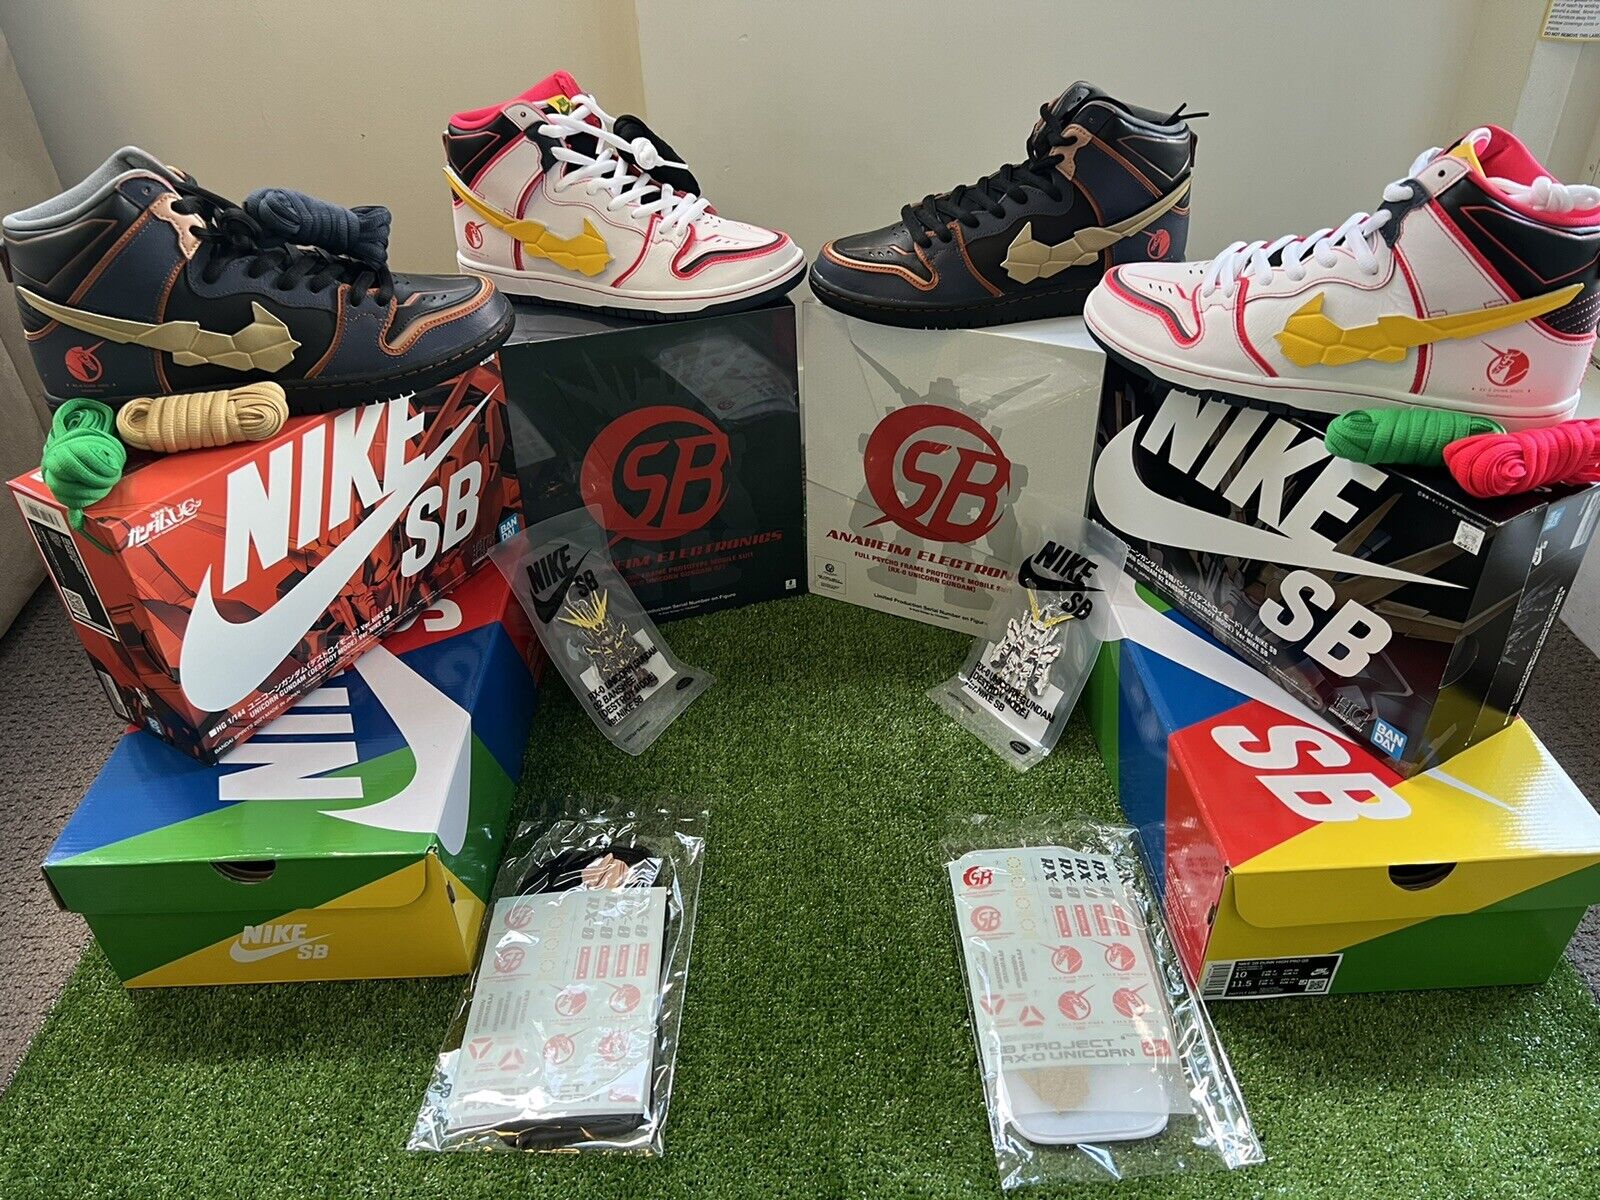 ✅GUNDAM X SB Dunk ( the full collection ) Shoes Size US10 Brand New Unopened✅ Nike + Bandai Gundam